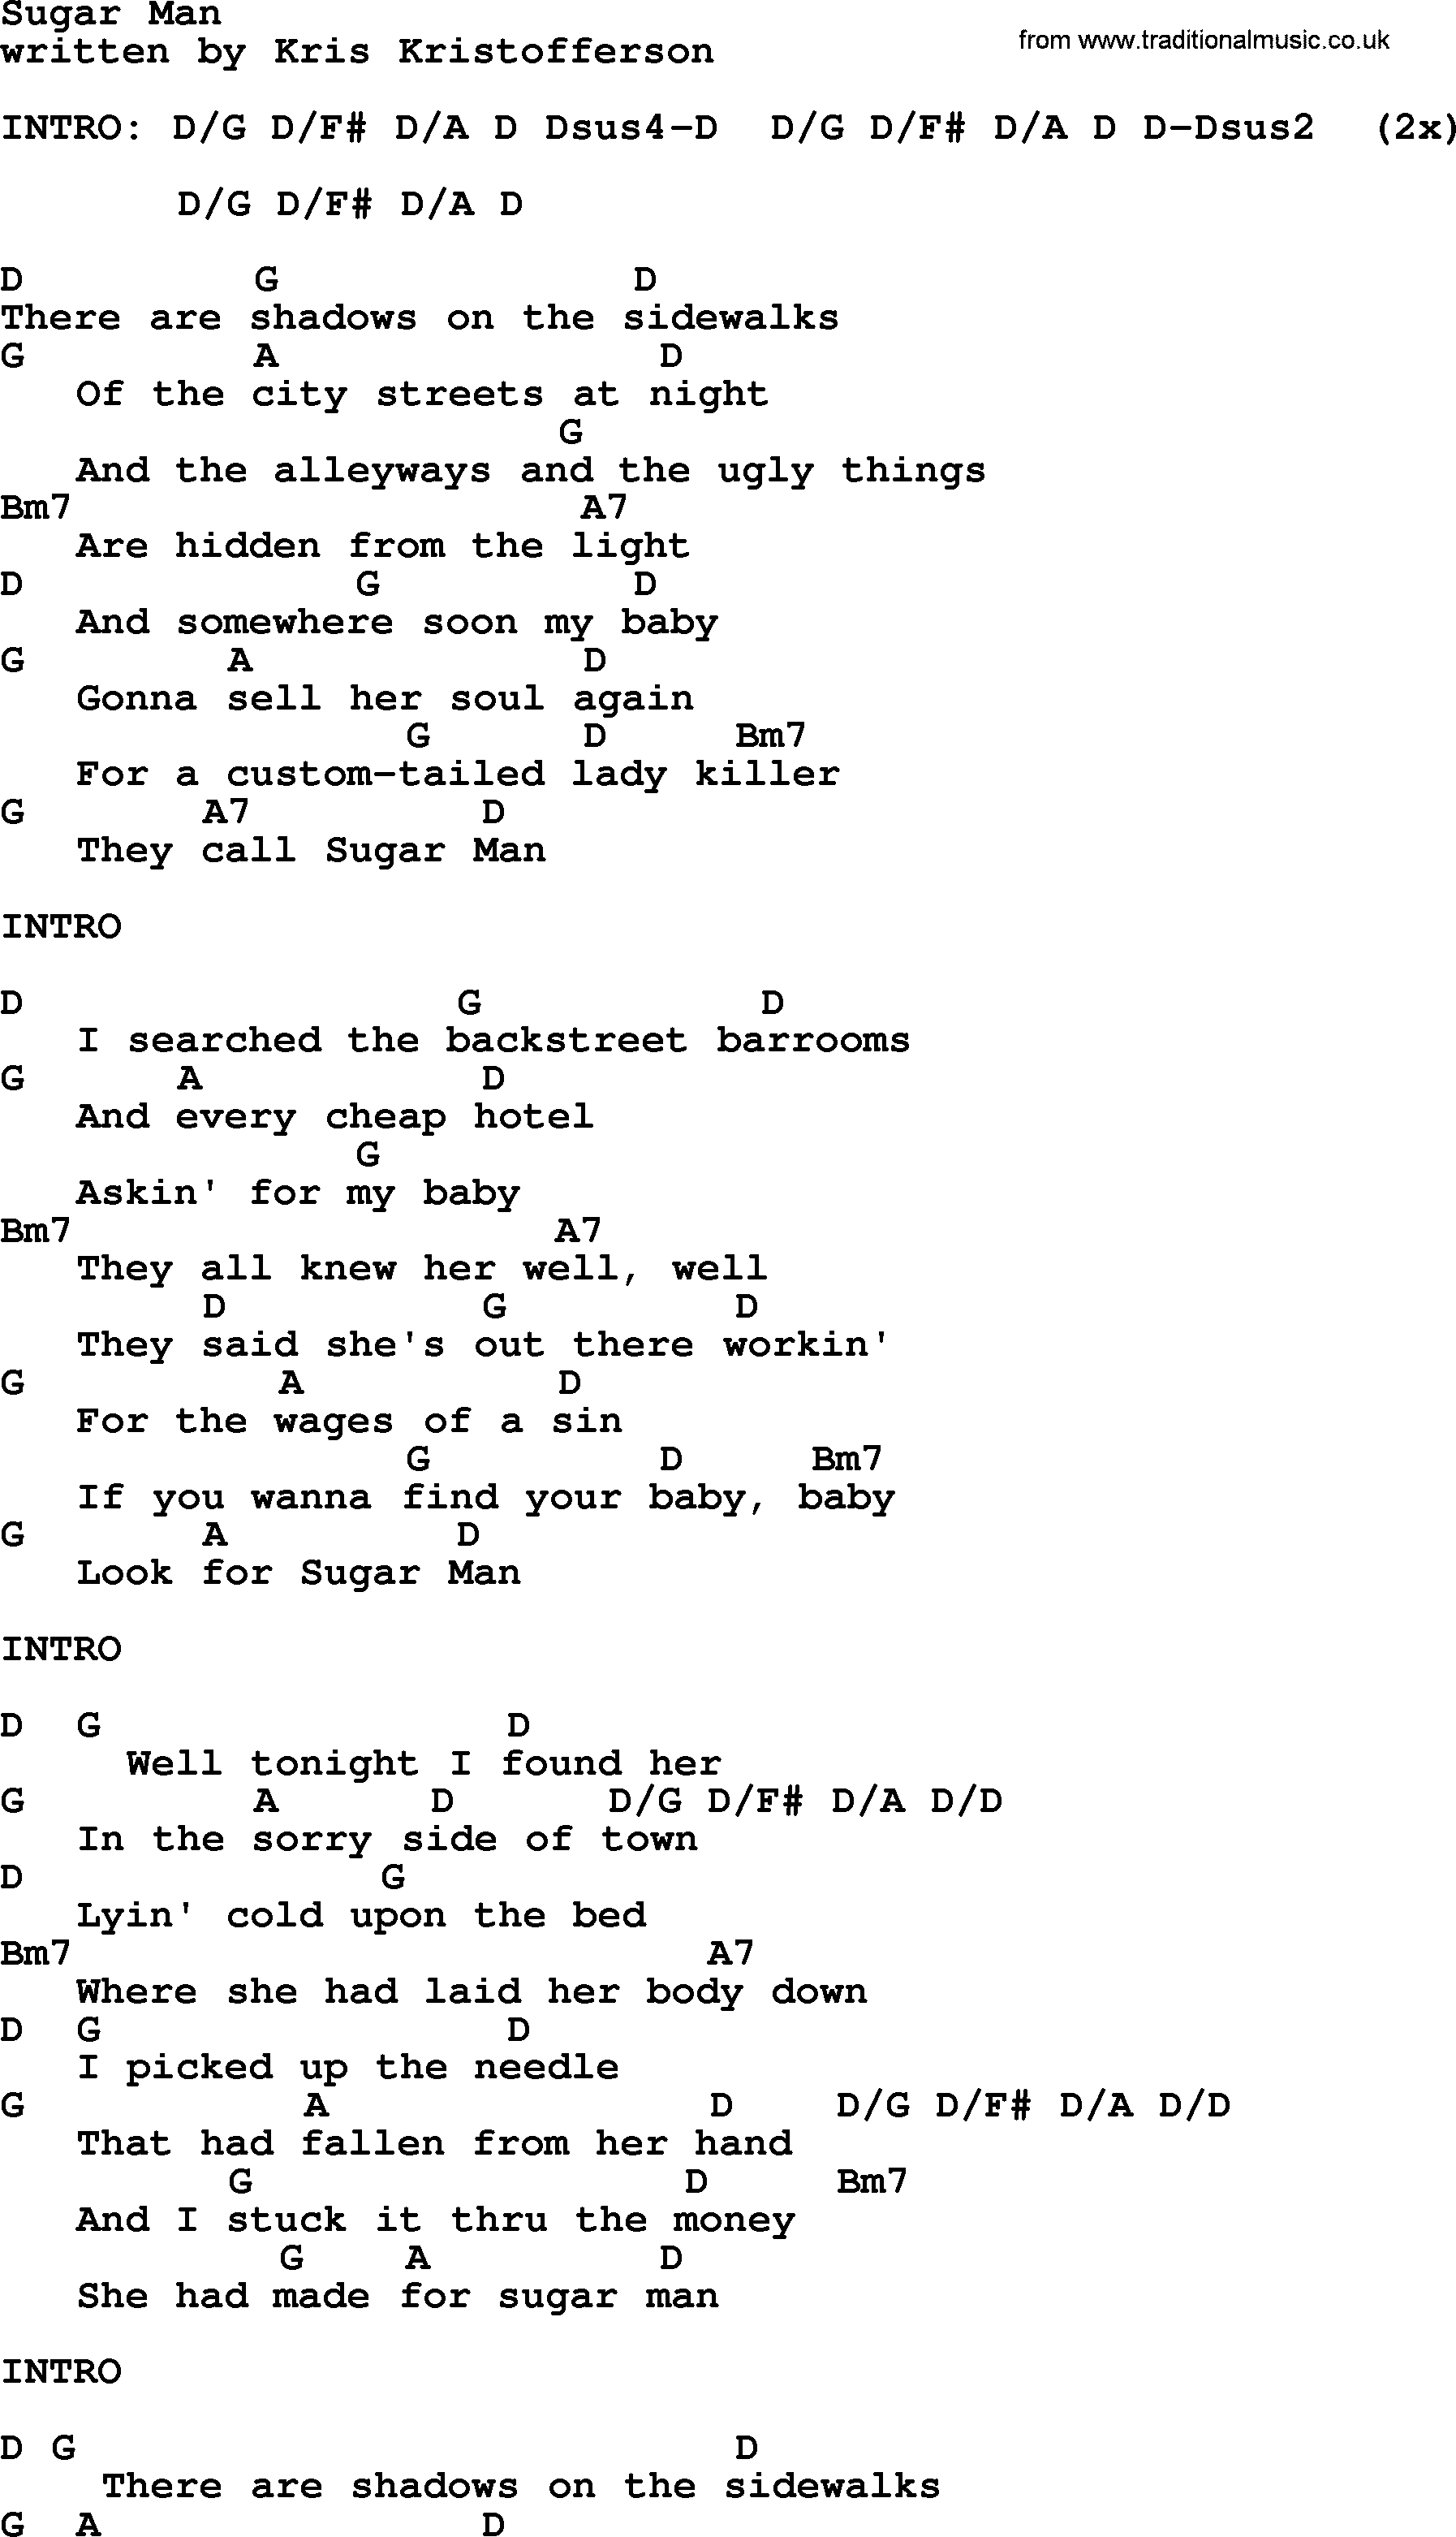 Kris Kristofferson song: Sugar Man lyrics and chords